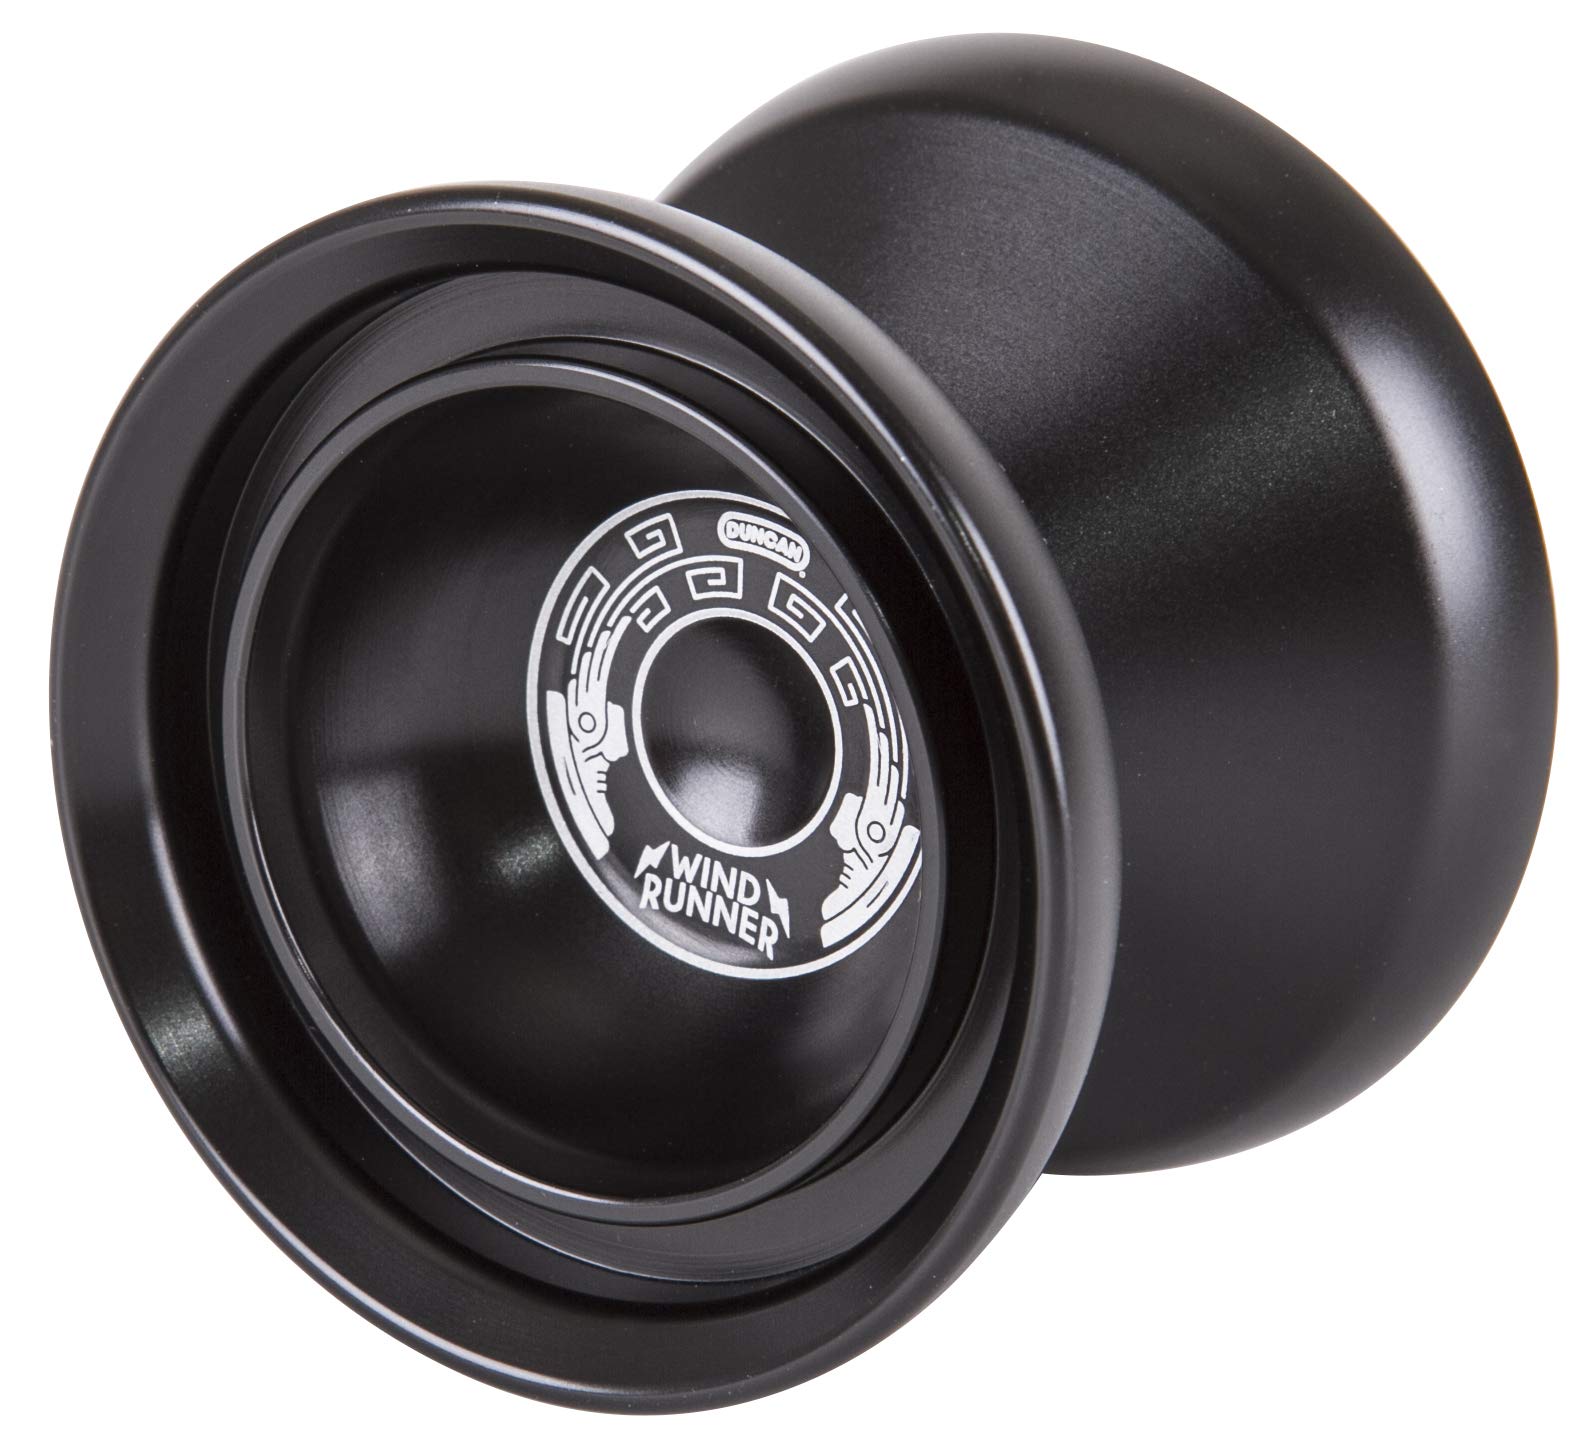 Duncan Toys Windrunner Yo-Yo [Black] - Unresponsive Pro Level Aluminum Yo-Yo with Double Rim, Concave Bearing, SG Sticker Response